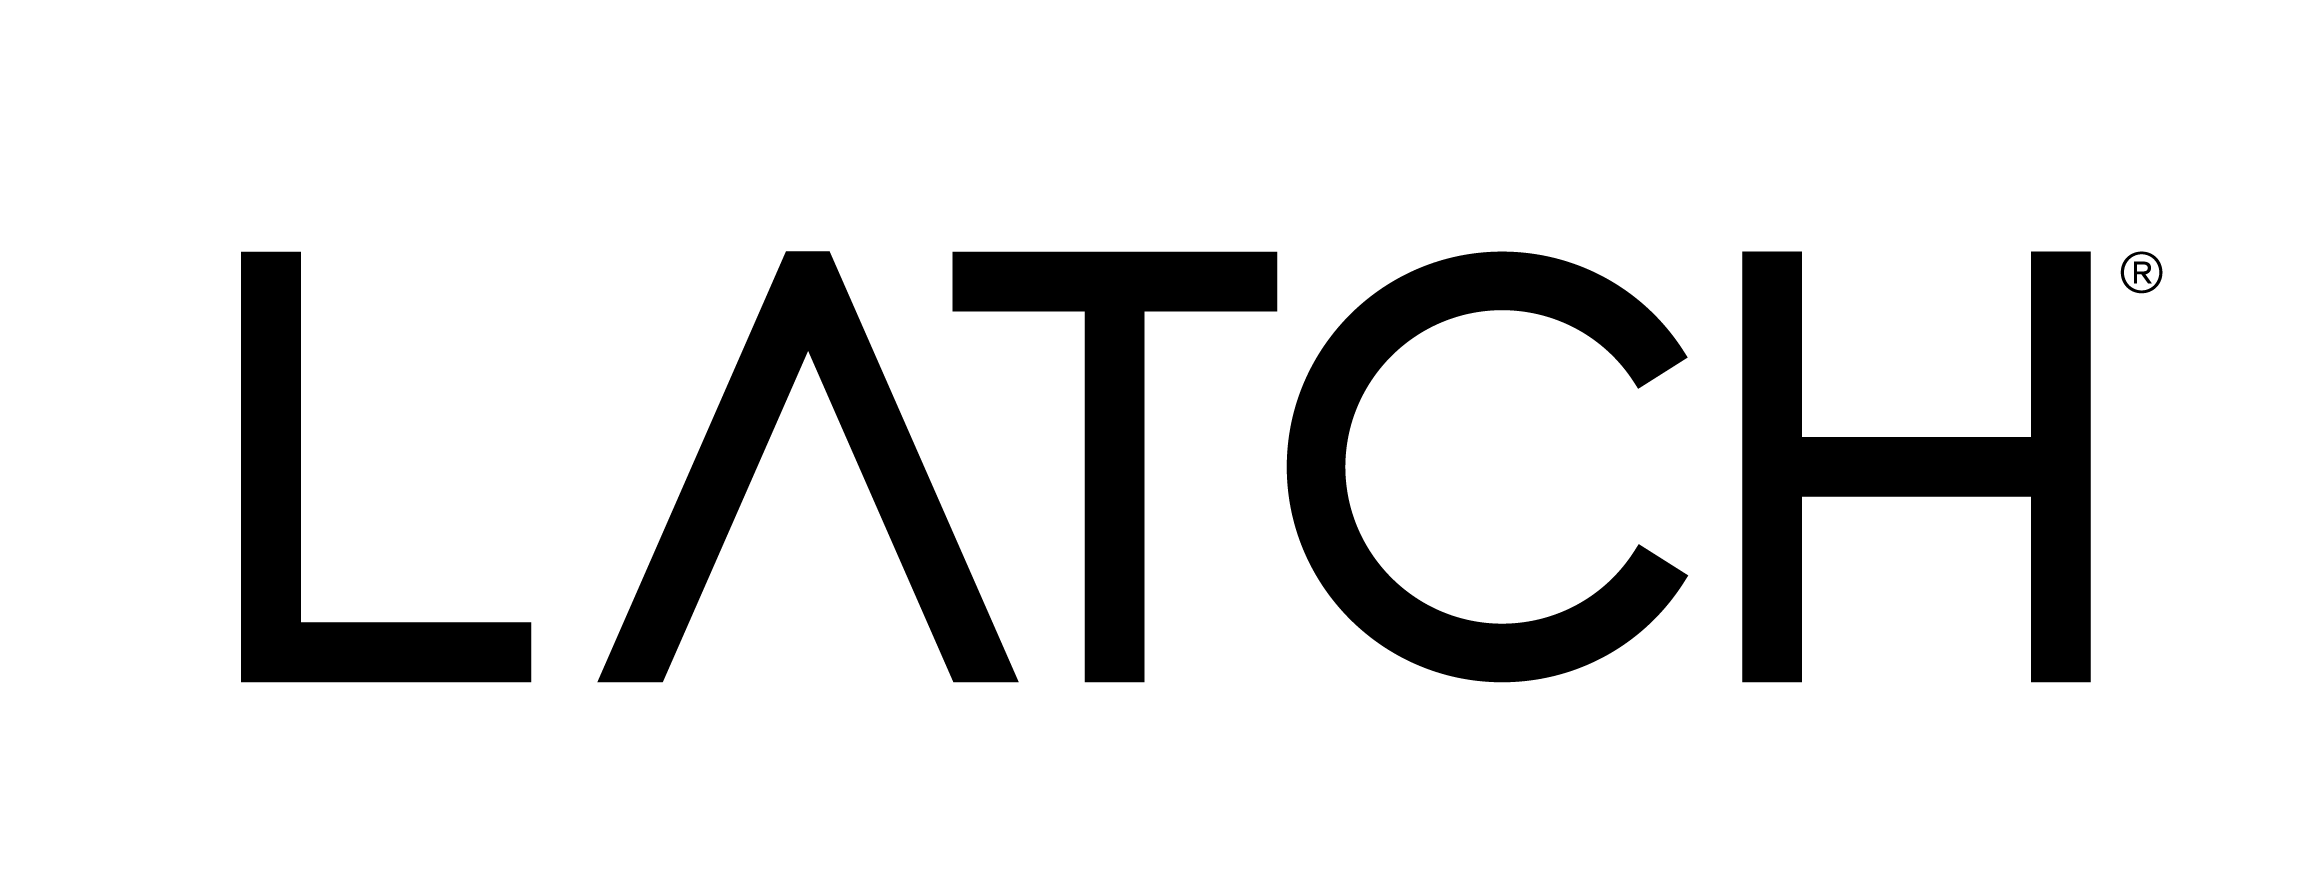 Latch Logo Black.png